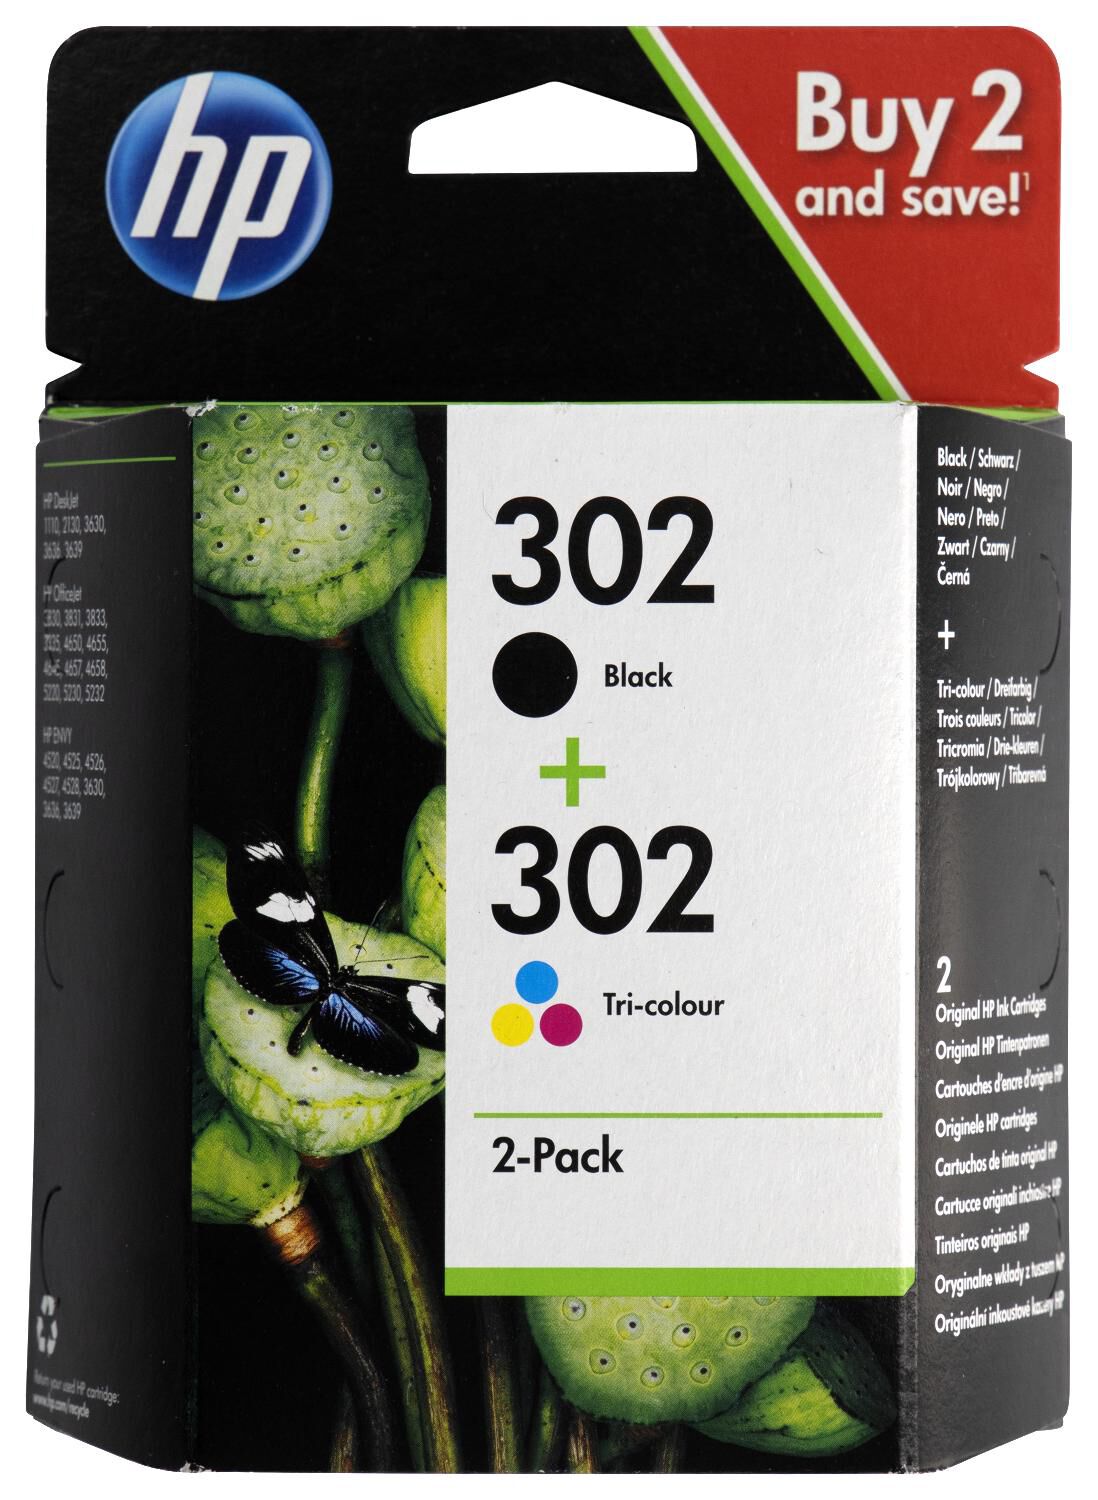 2 cartouches HP 302 noir/couleur - HEMA